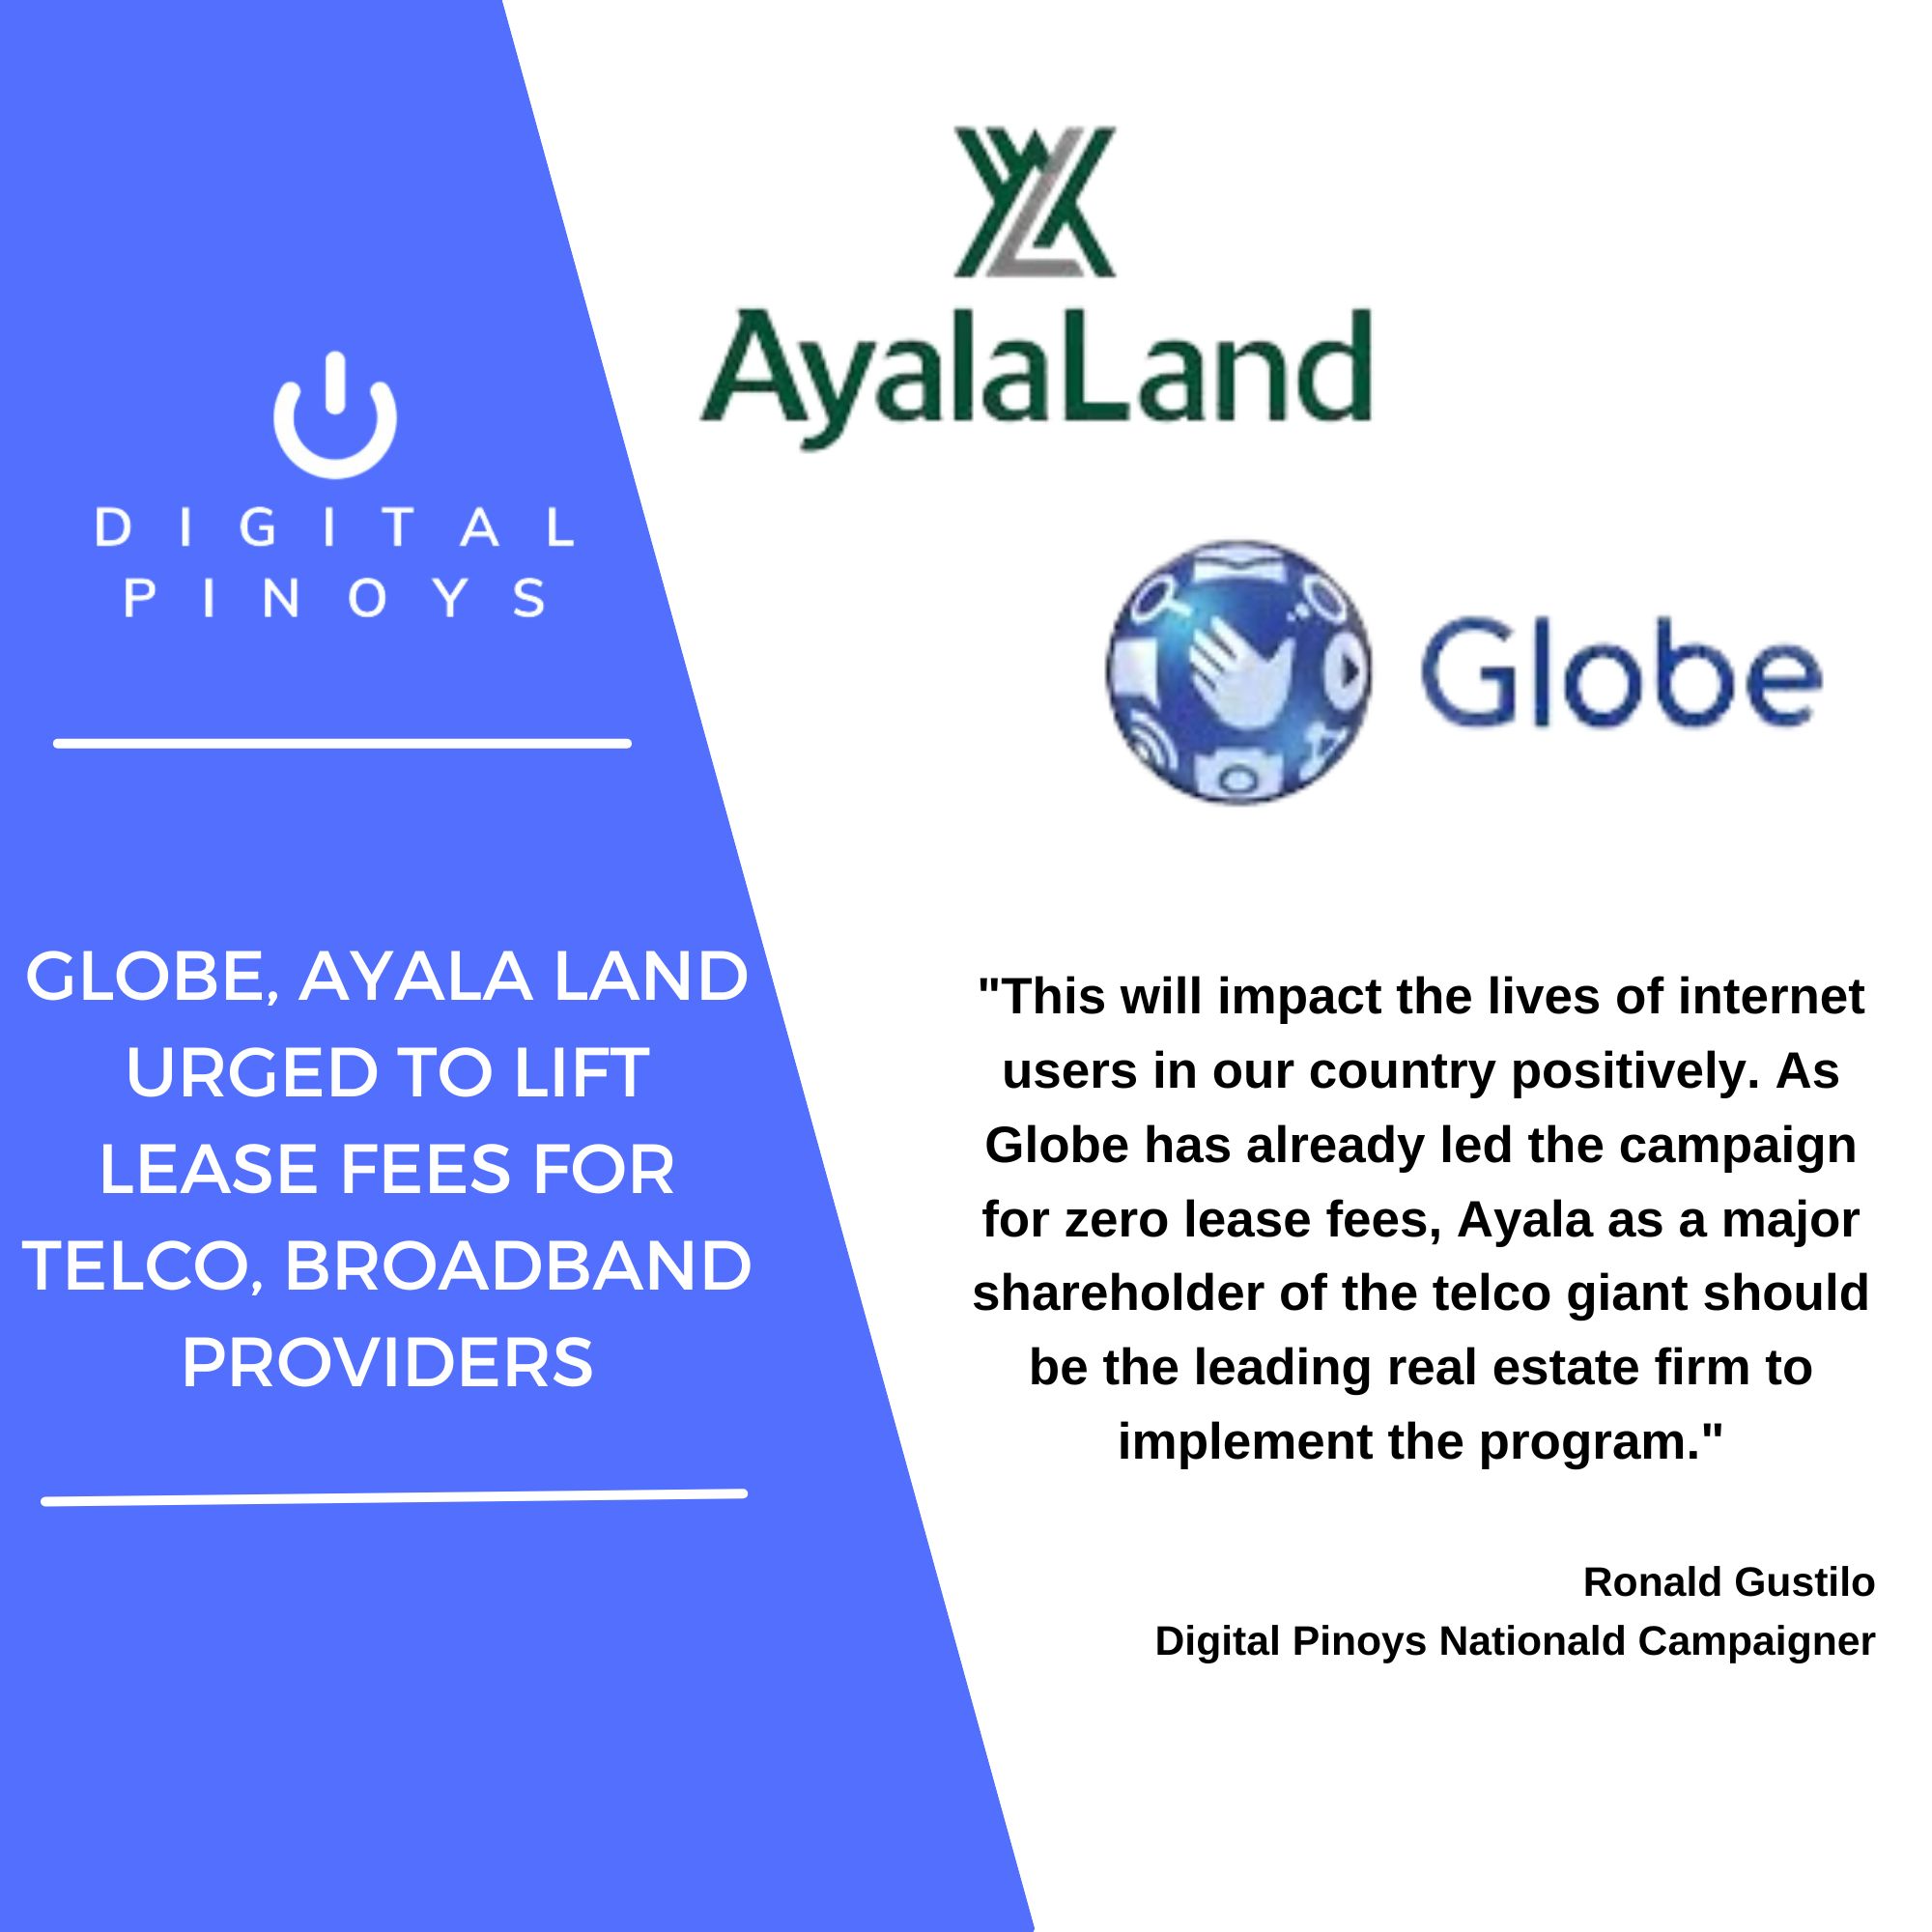 Globe, Ayala Land urged to lift lease fees for telco, broadband providers